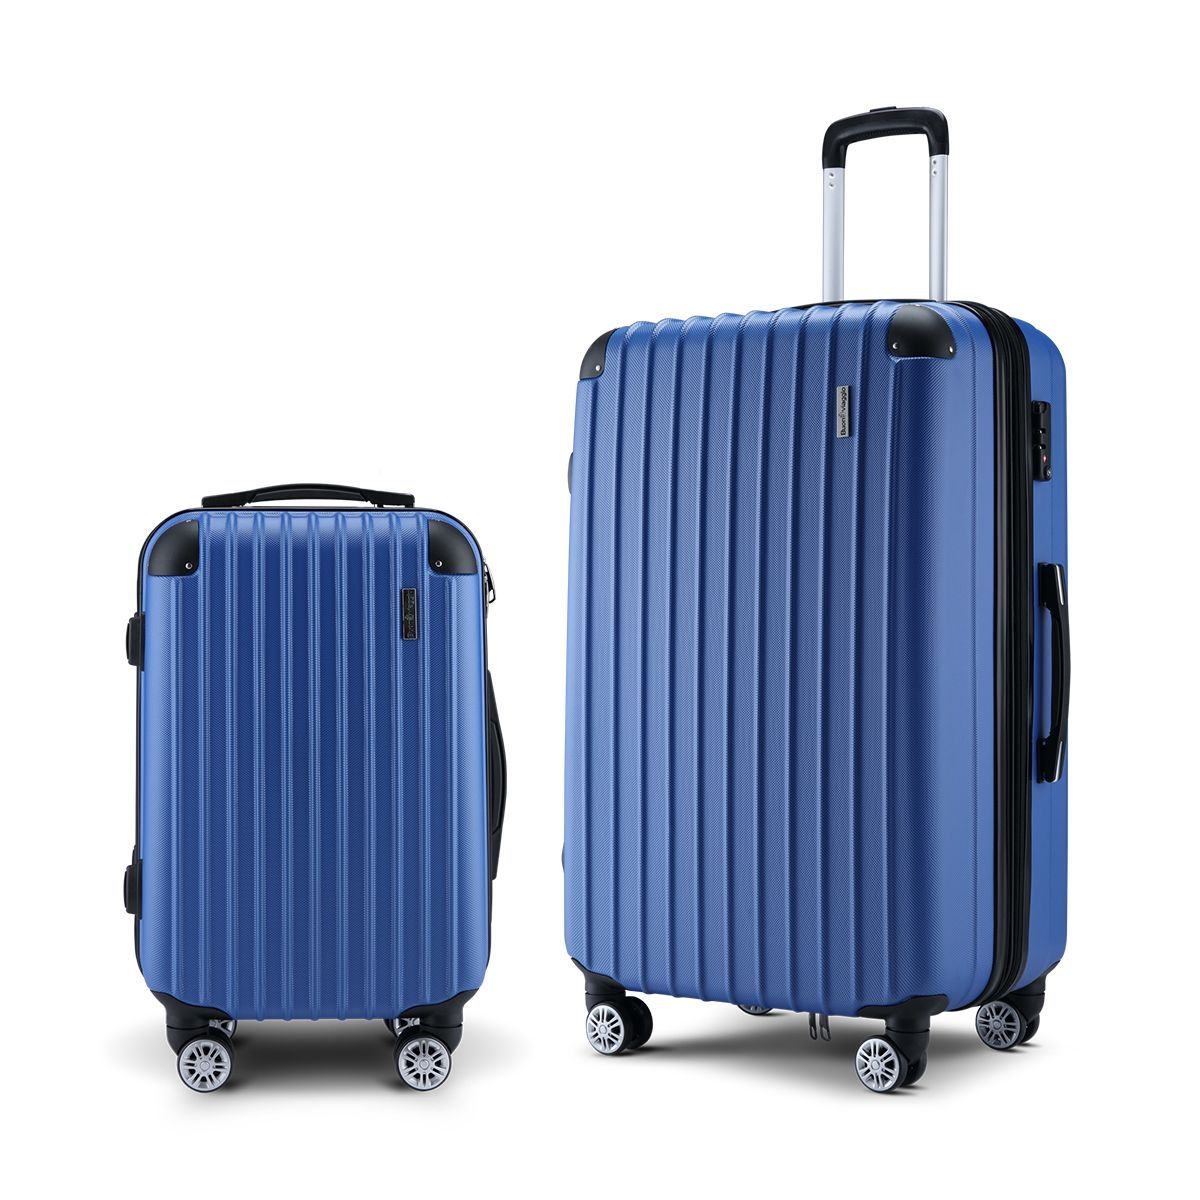 Buon Viaggio 2 Luggage Set with TSA Lock - Blue | Buy 2 Piece Luggage ...